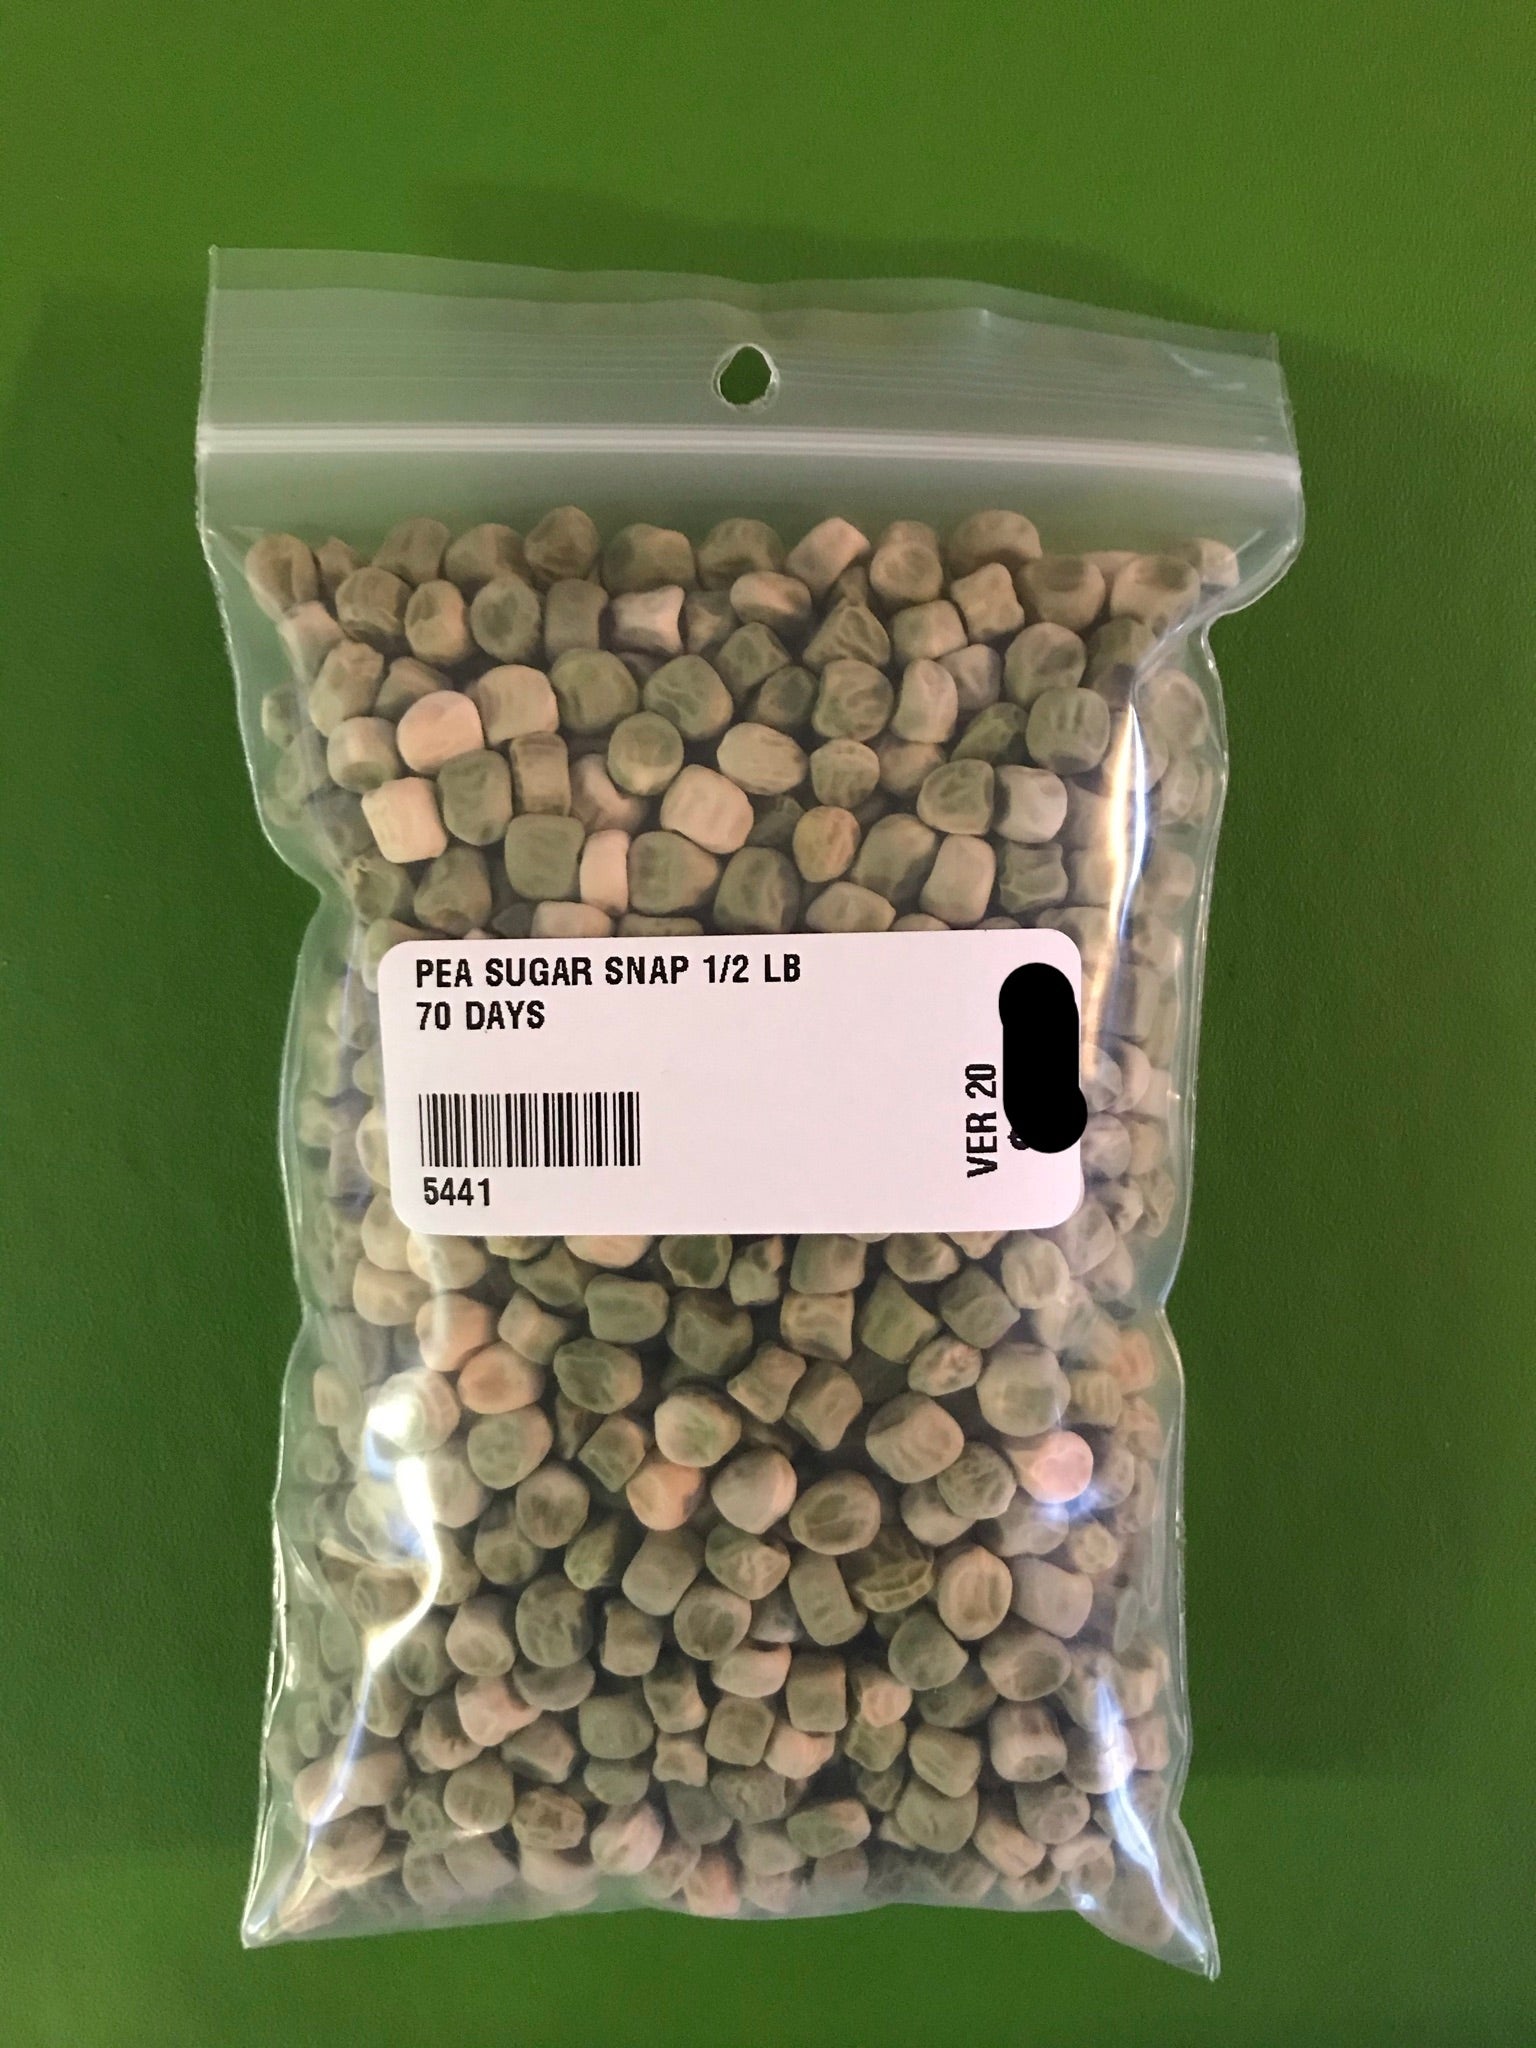 Sugar Snap Pea Seeds (Edible Pod Type) (70 Days) - 1/2 LB - Bulk